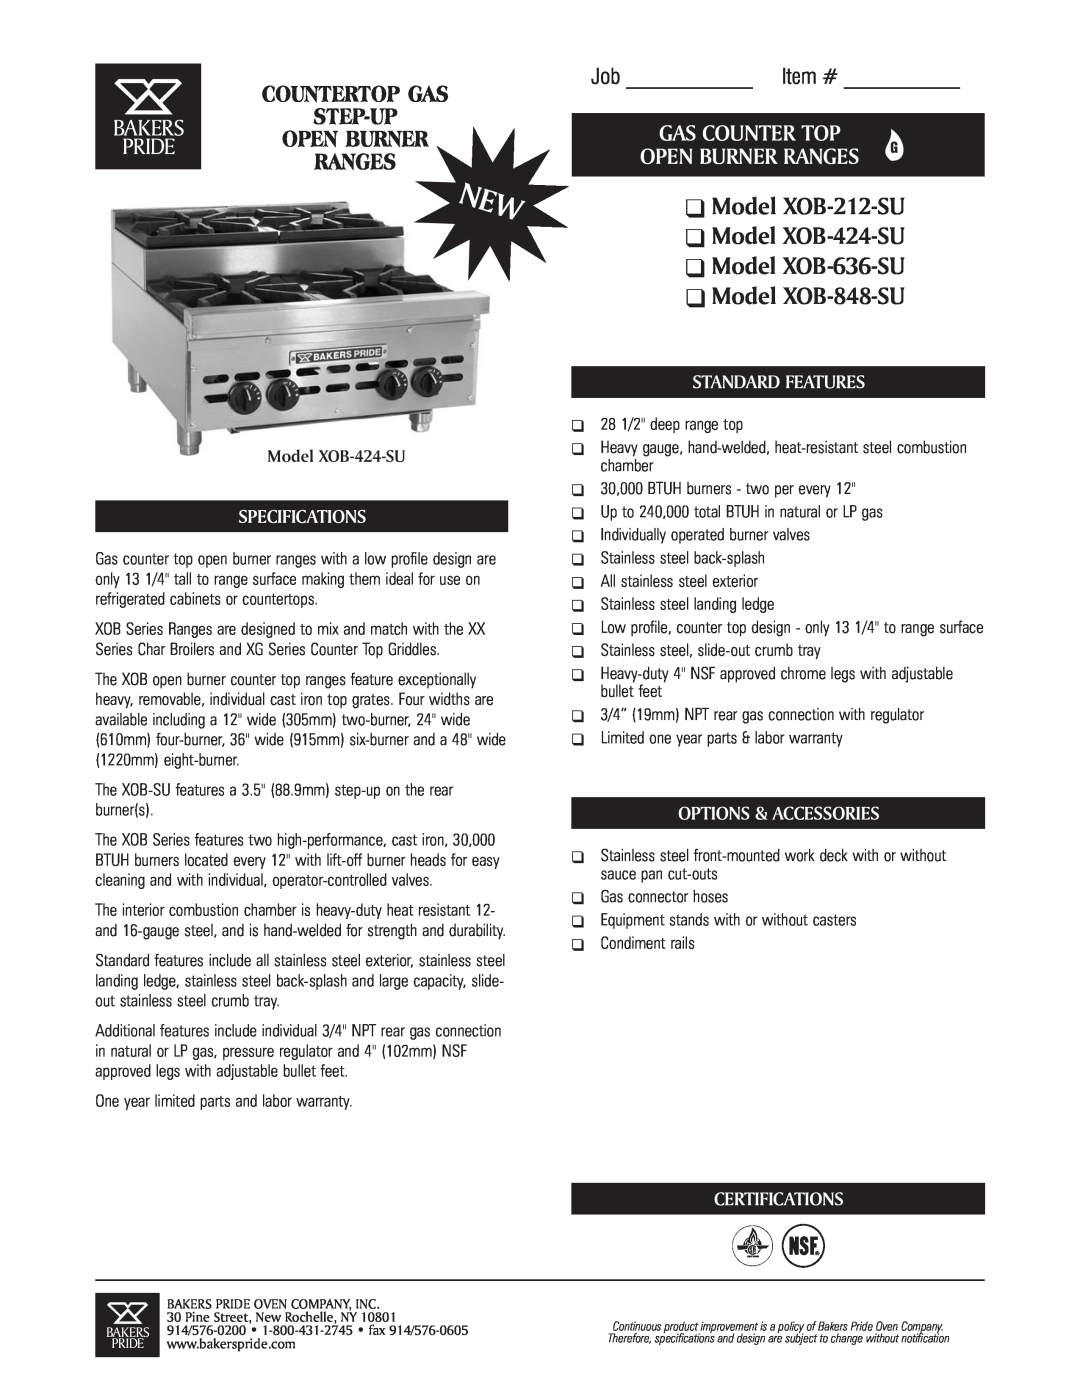 Bakers Pride Oven specifications Model XOB-212-SU Model XOB-424-SU, Model XOB-636-SU Model XOB-848-SU, Job Item # 